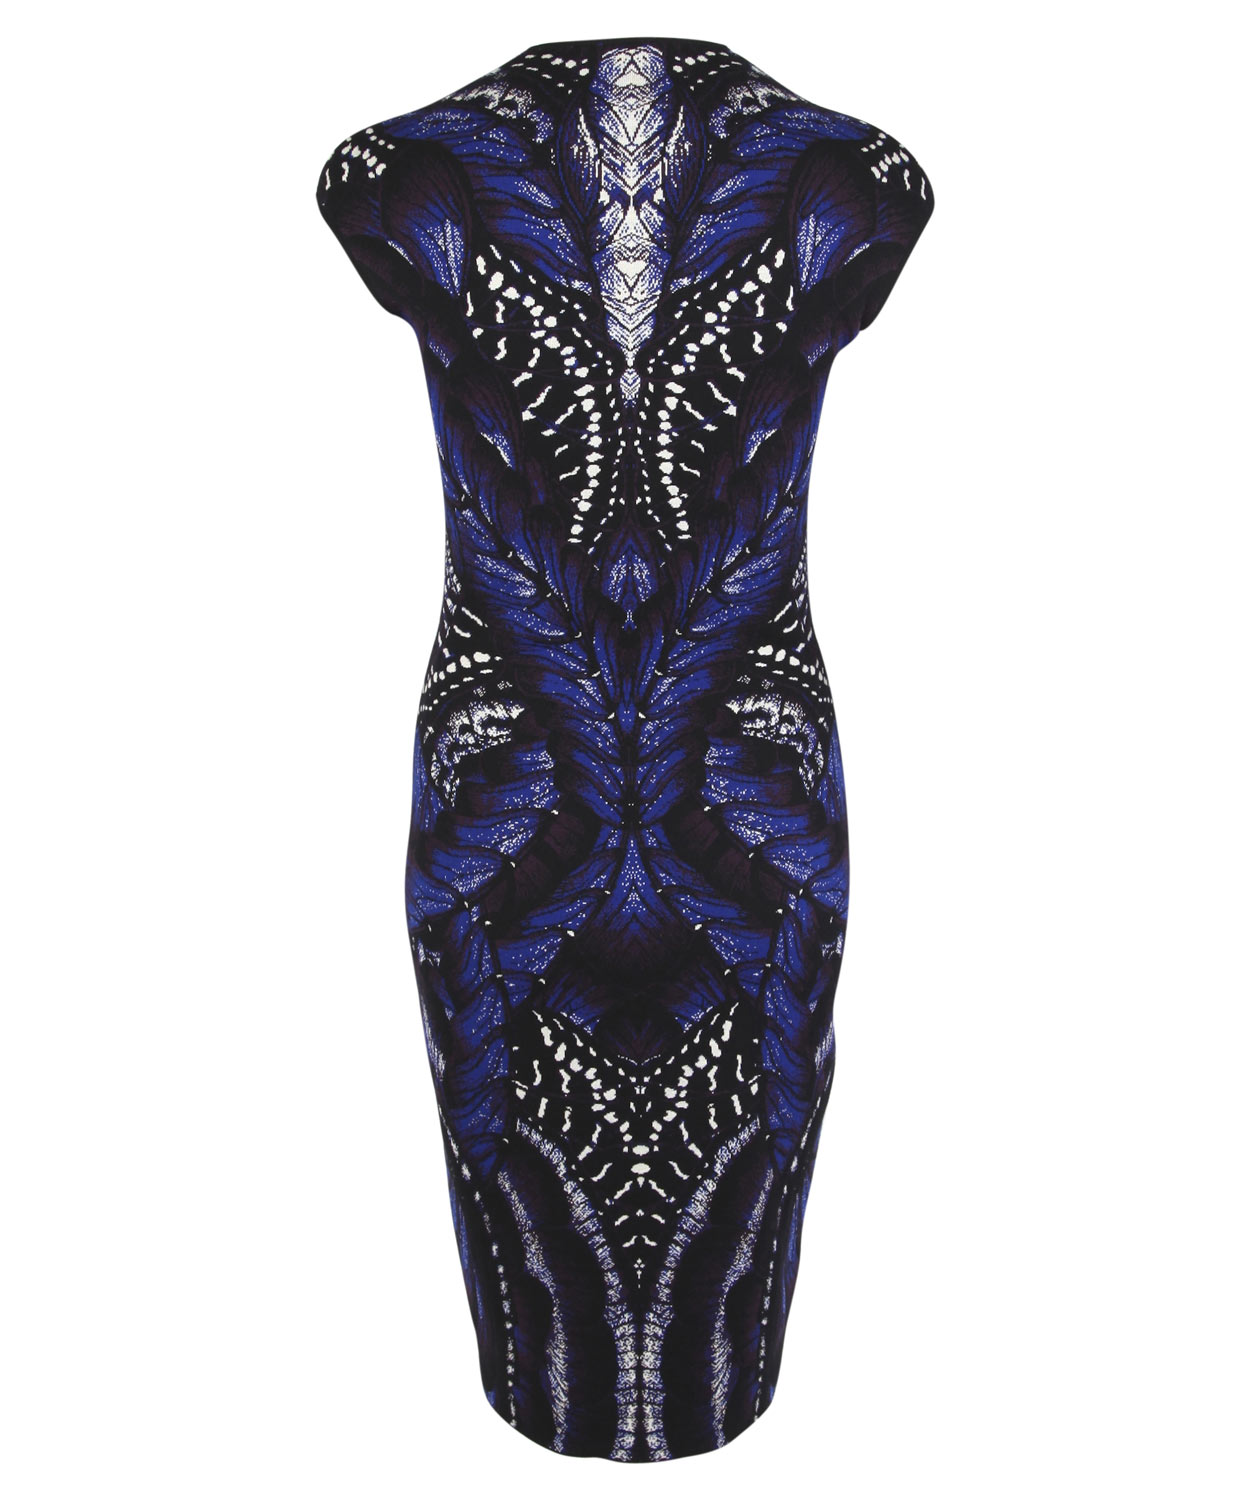 Lyst - Alexander Mcqueen Blue Butterfly Print Intarsia Pencil Dress in Blue